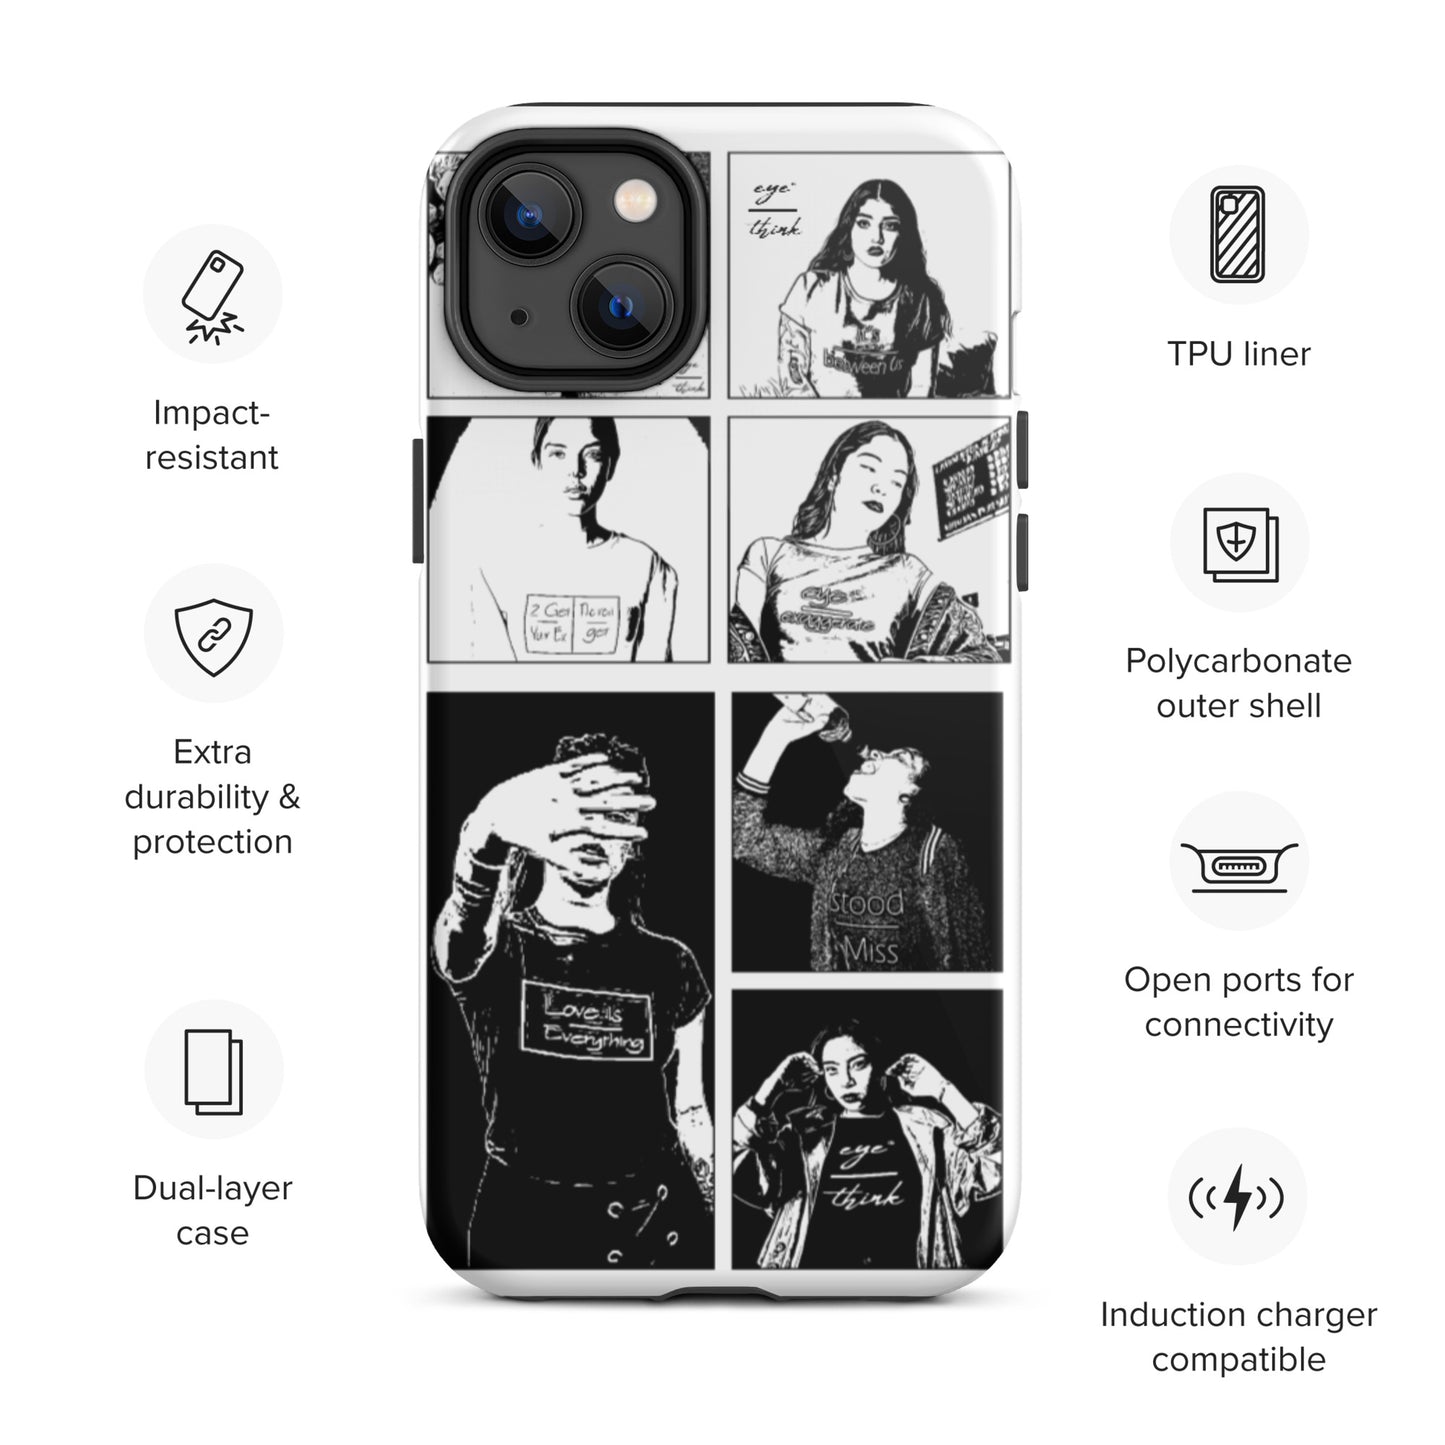 eyeoverthink® Tough iPhone case